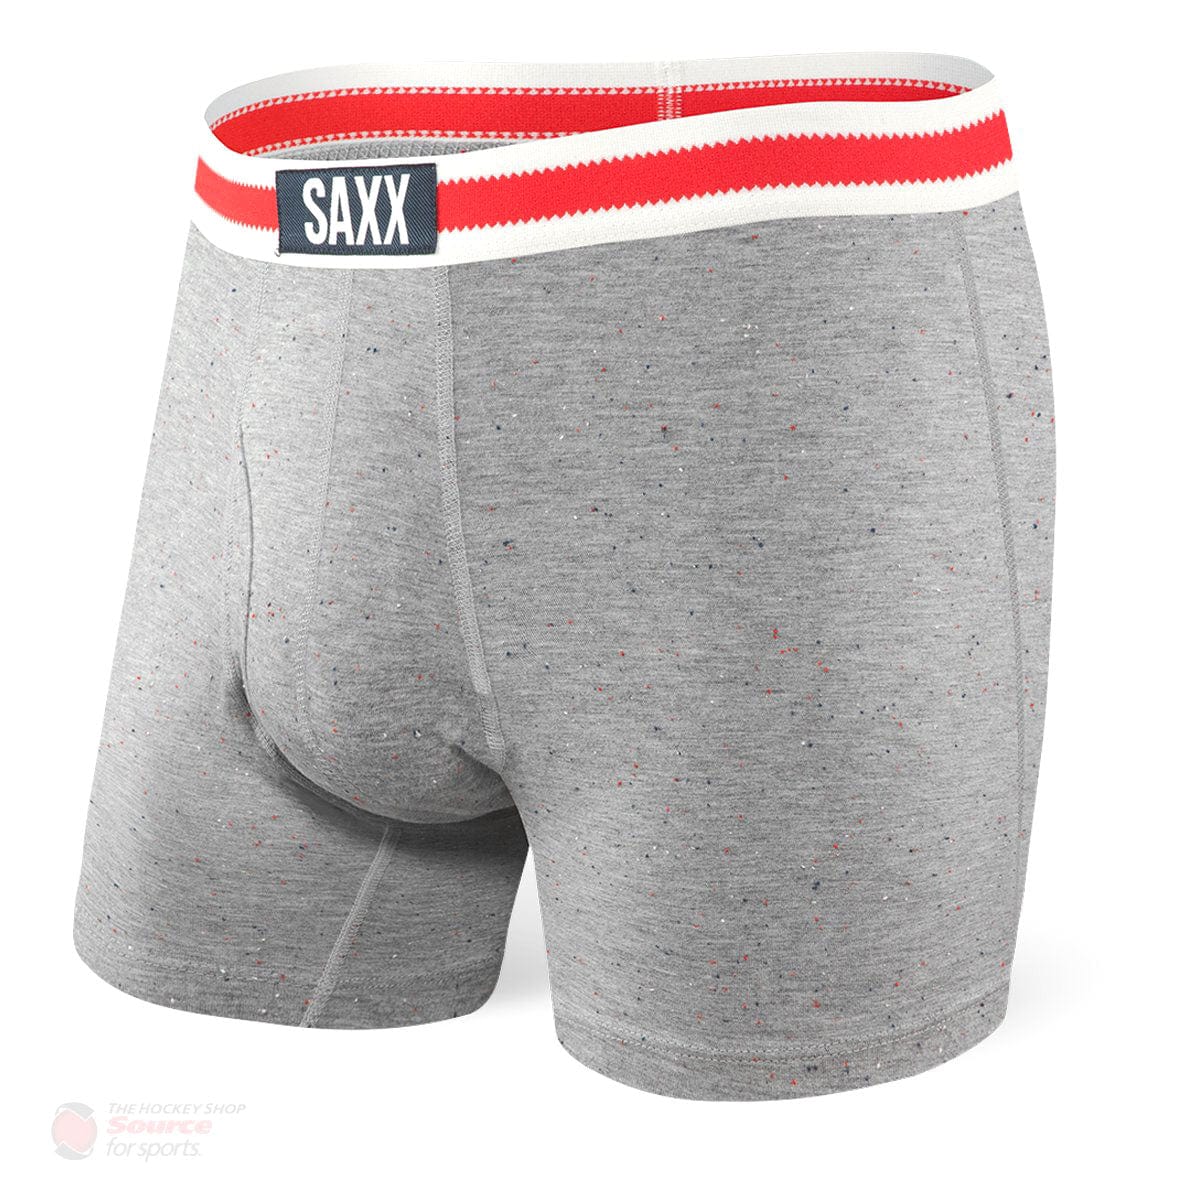 Saxx Ultra Boxers - Grey Sock Monkey